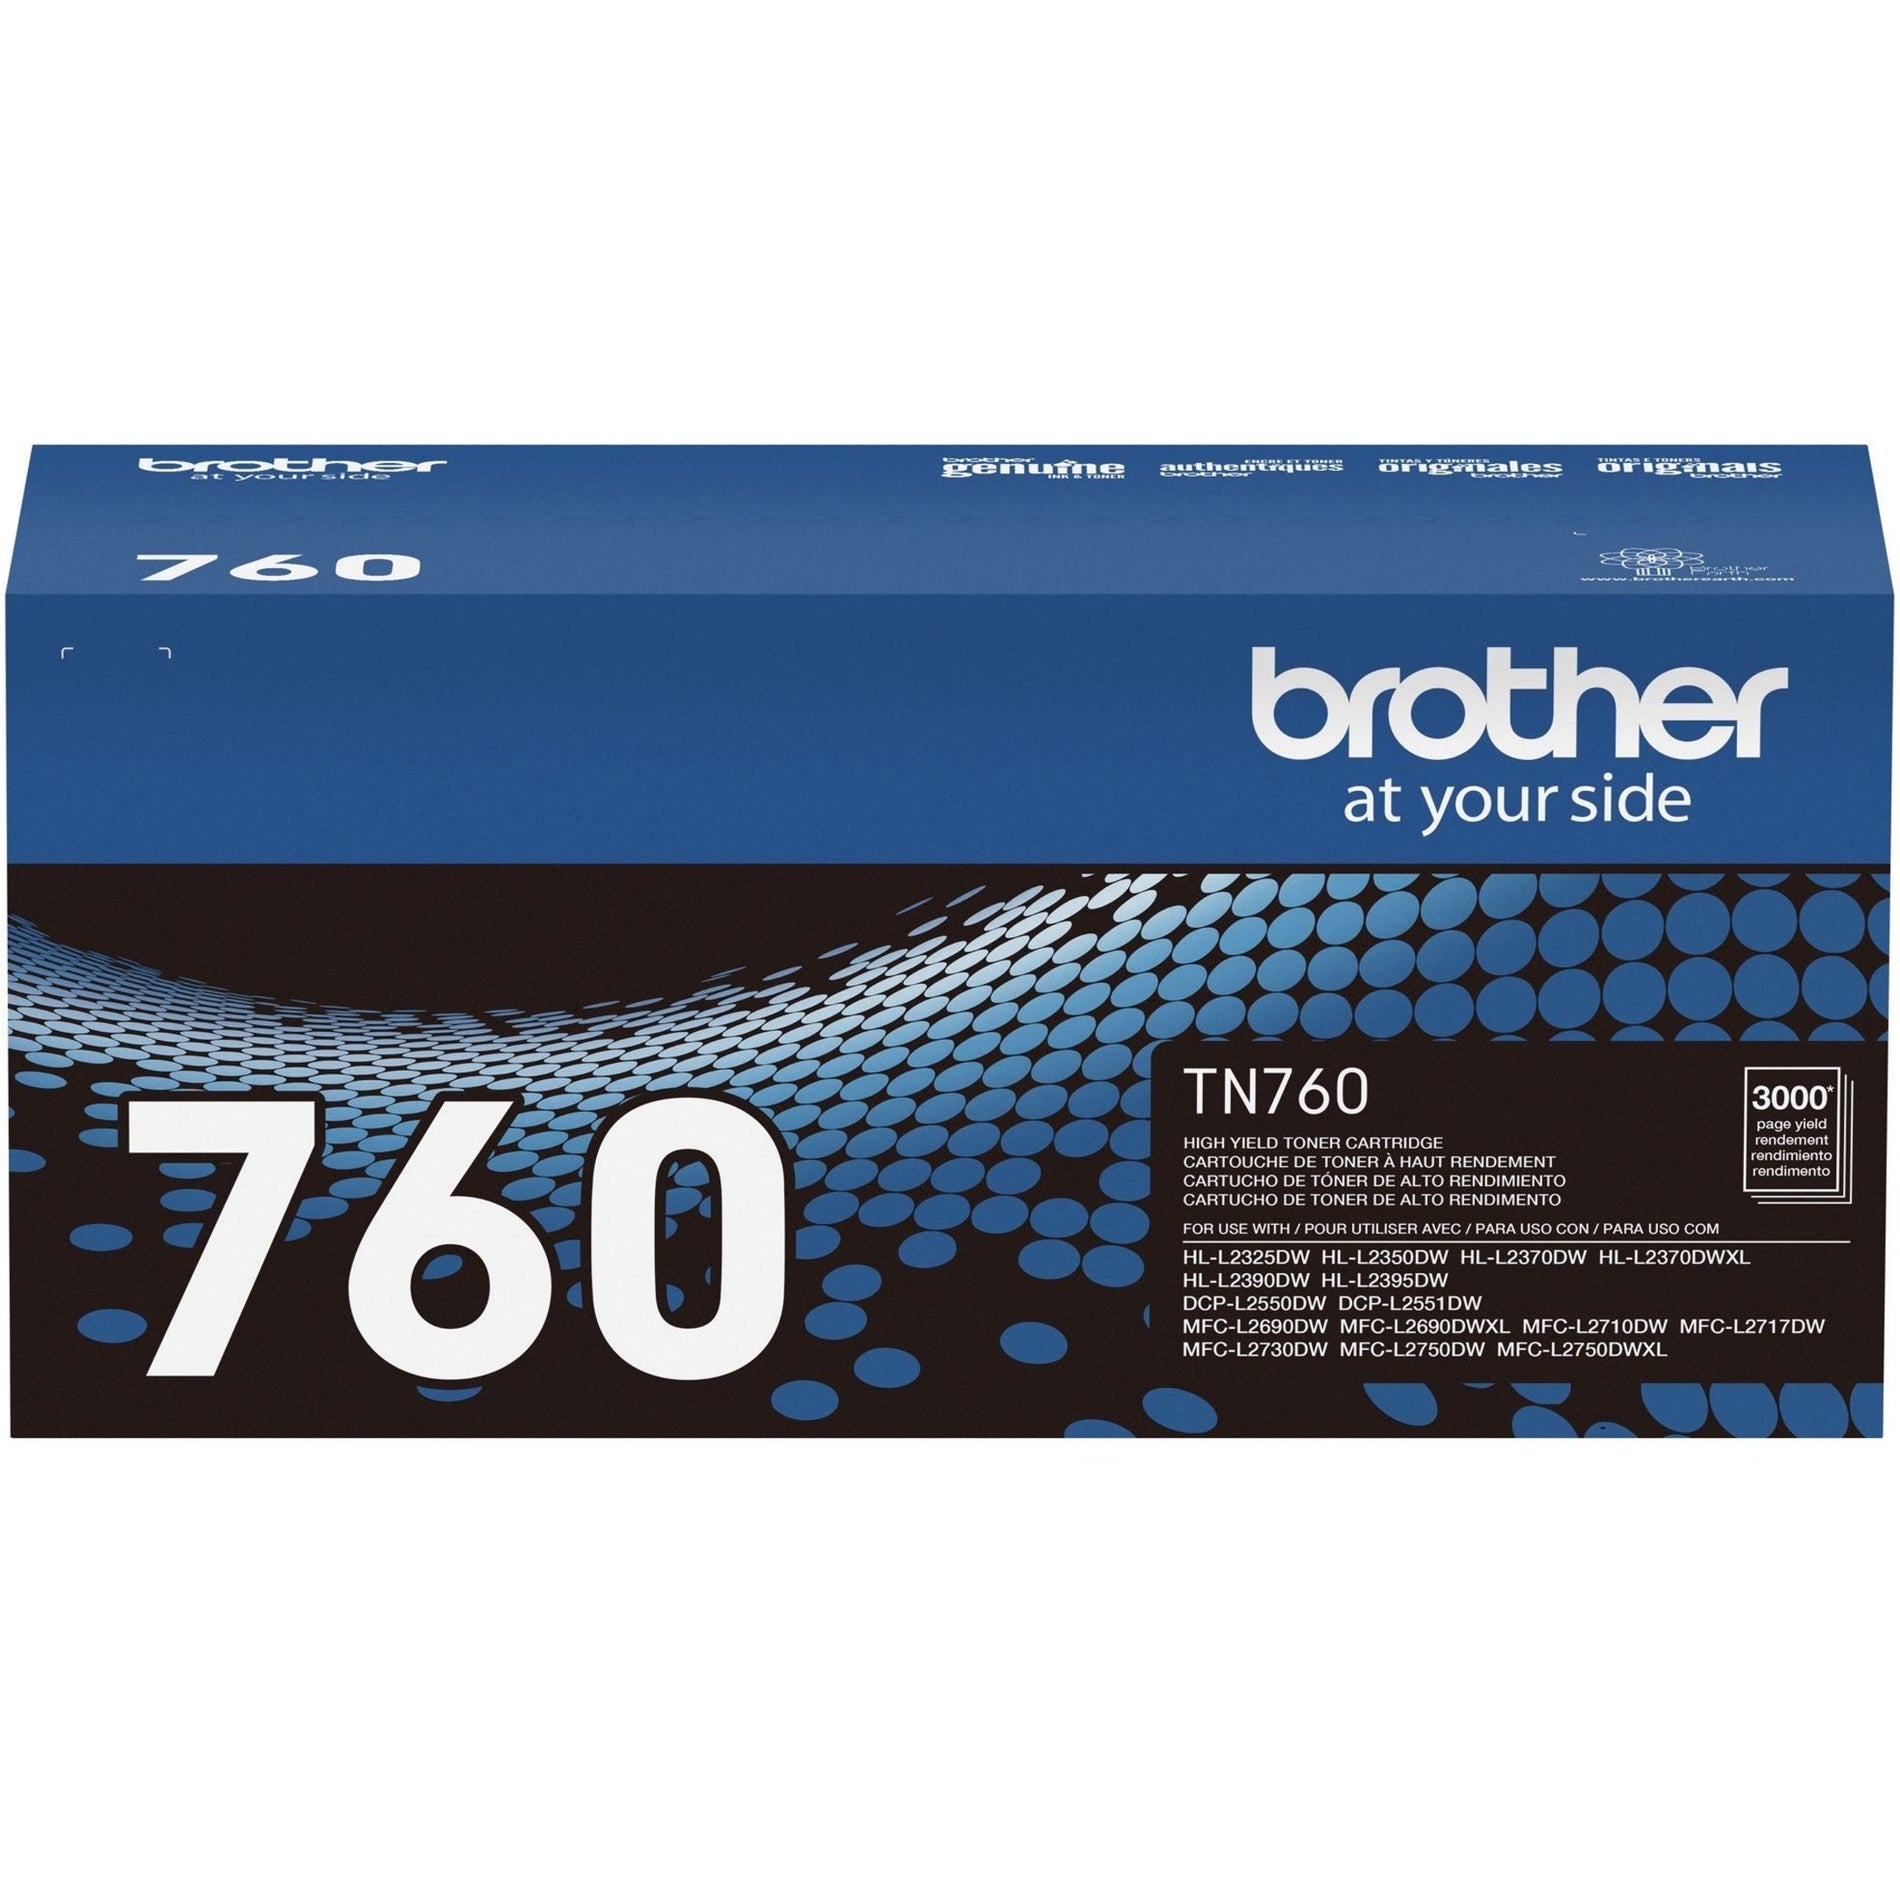 TN-760 原装 高产量 墨盒 - 黑色 兼容 HL-L2350DW HL-L2390DW HL-L2395DW HL-L2370DW DCP-L2550DW MFC-L2710DW MFC-L2750DW HL-L2370DW XL MFC-L2750DW XL 兄弟 (Brother)品牌。将品牌名称翻译为"兄弟"。